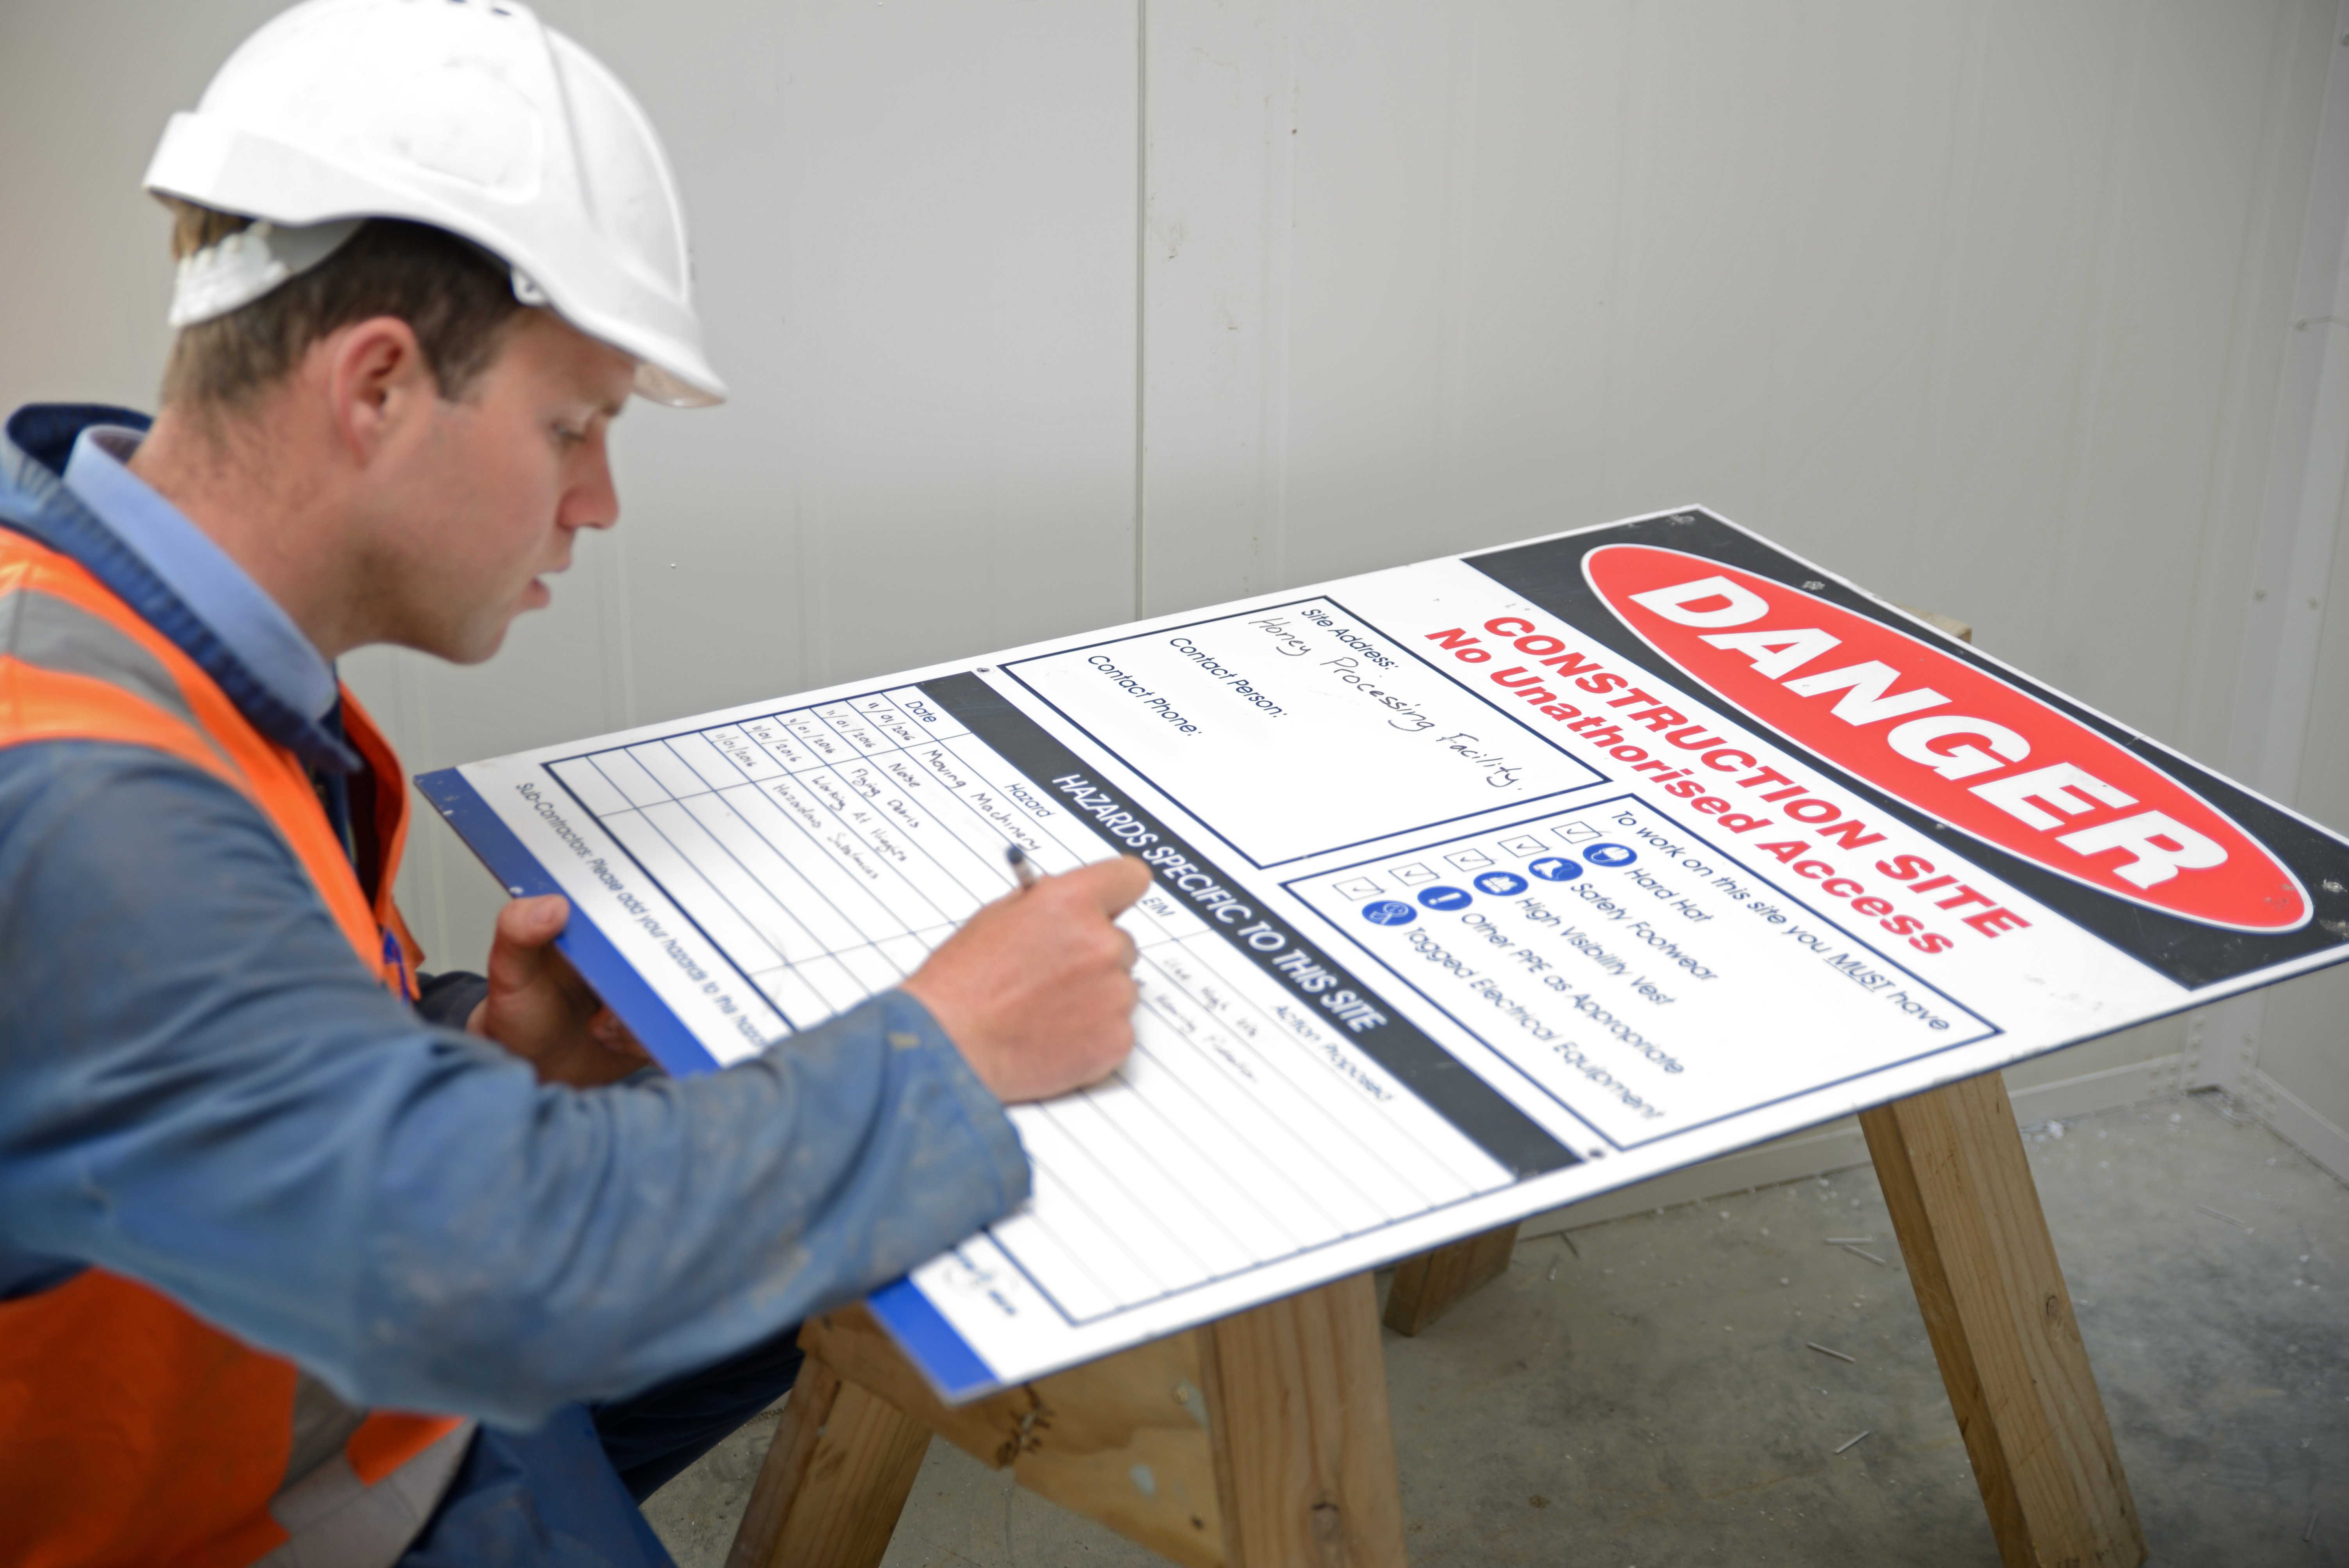 An OSHA inspector checks the hazards board at a construction site